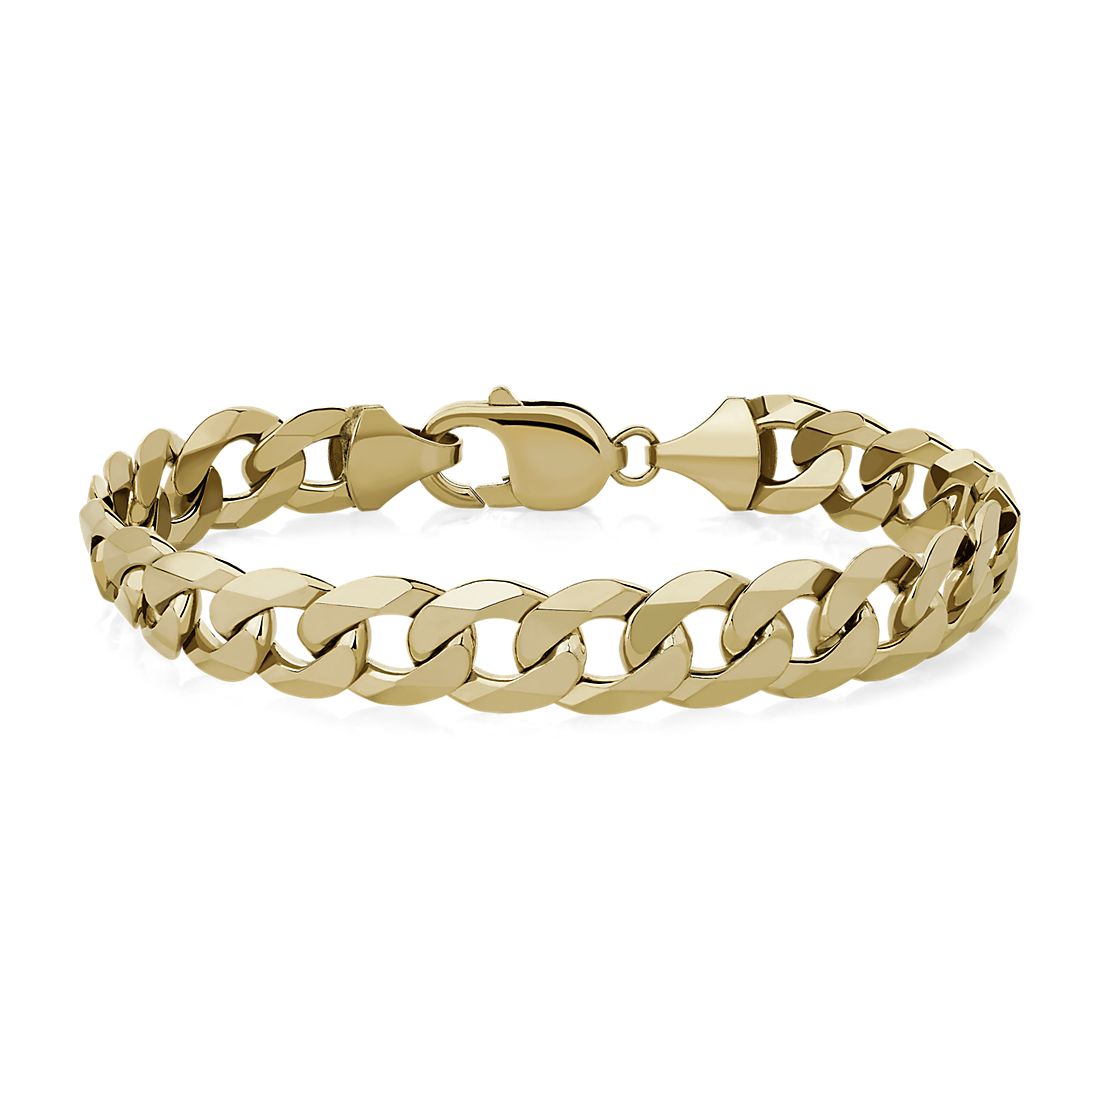 8" Men's Flat Beveled Curb Chain Bracelet in 14k Yellow Gold (9.5 mm)